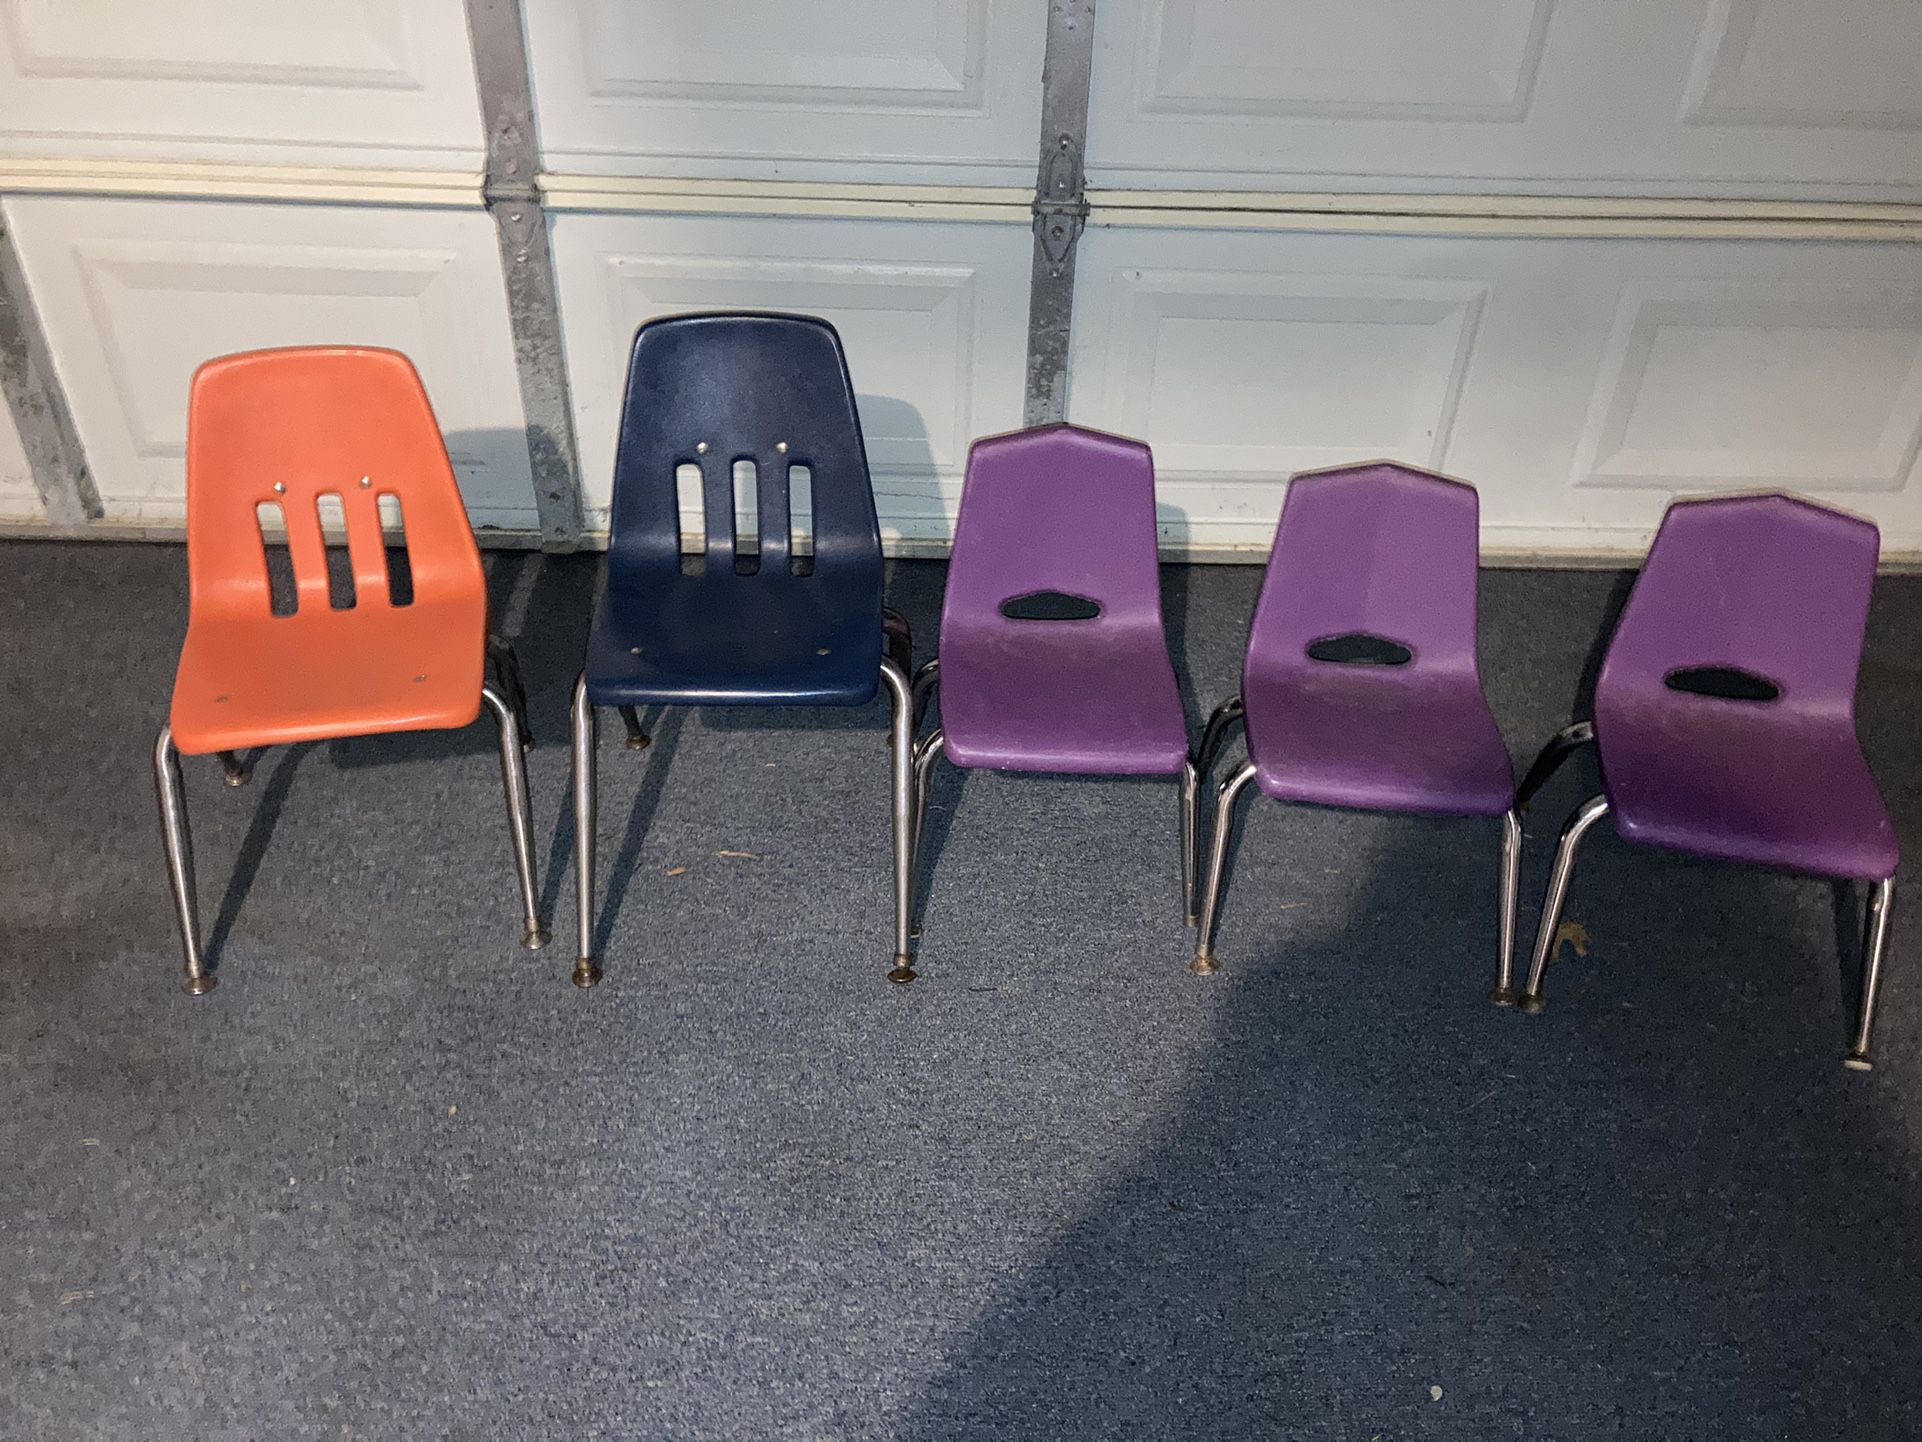 5 Preschool Chairs Or Kids Chairs 